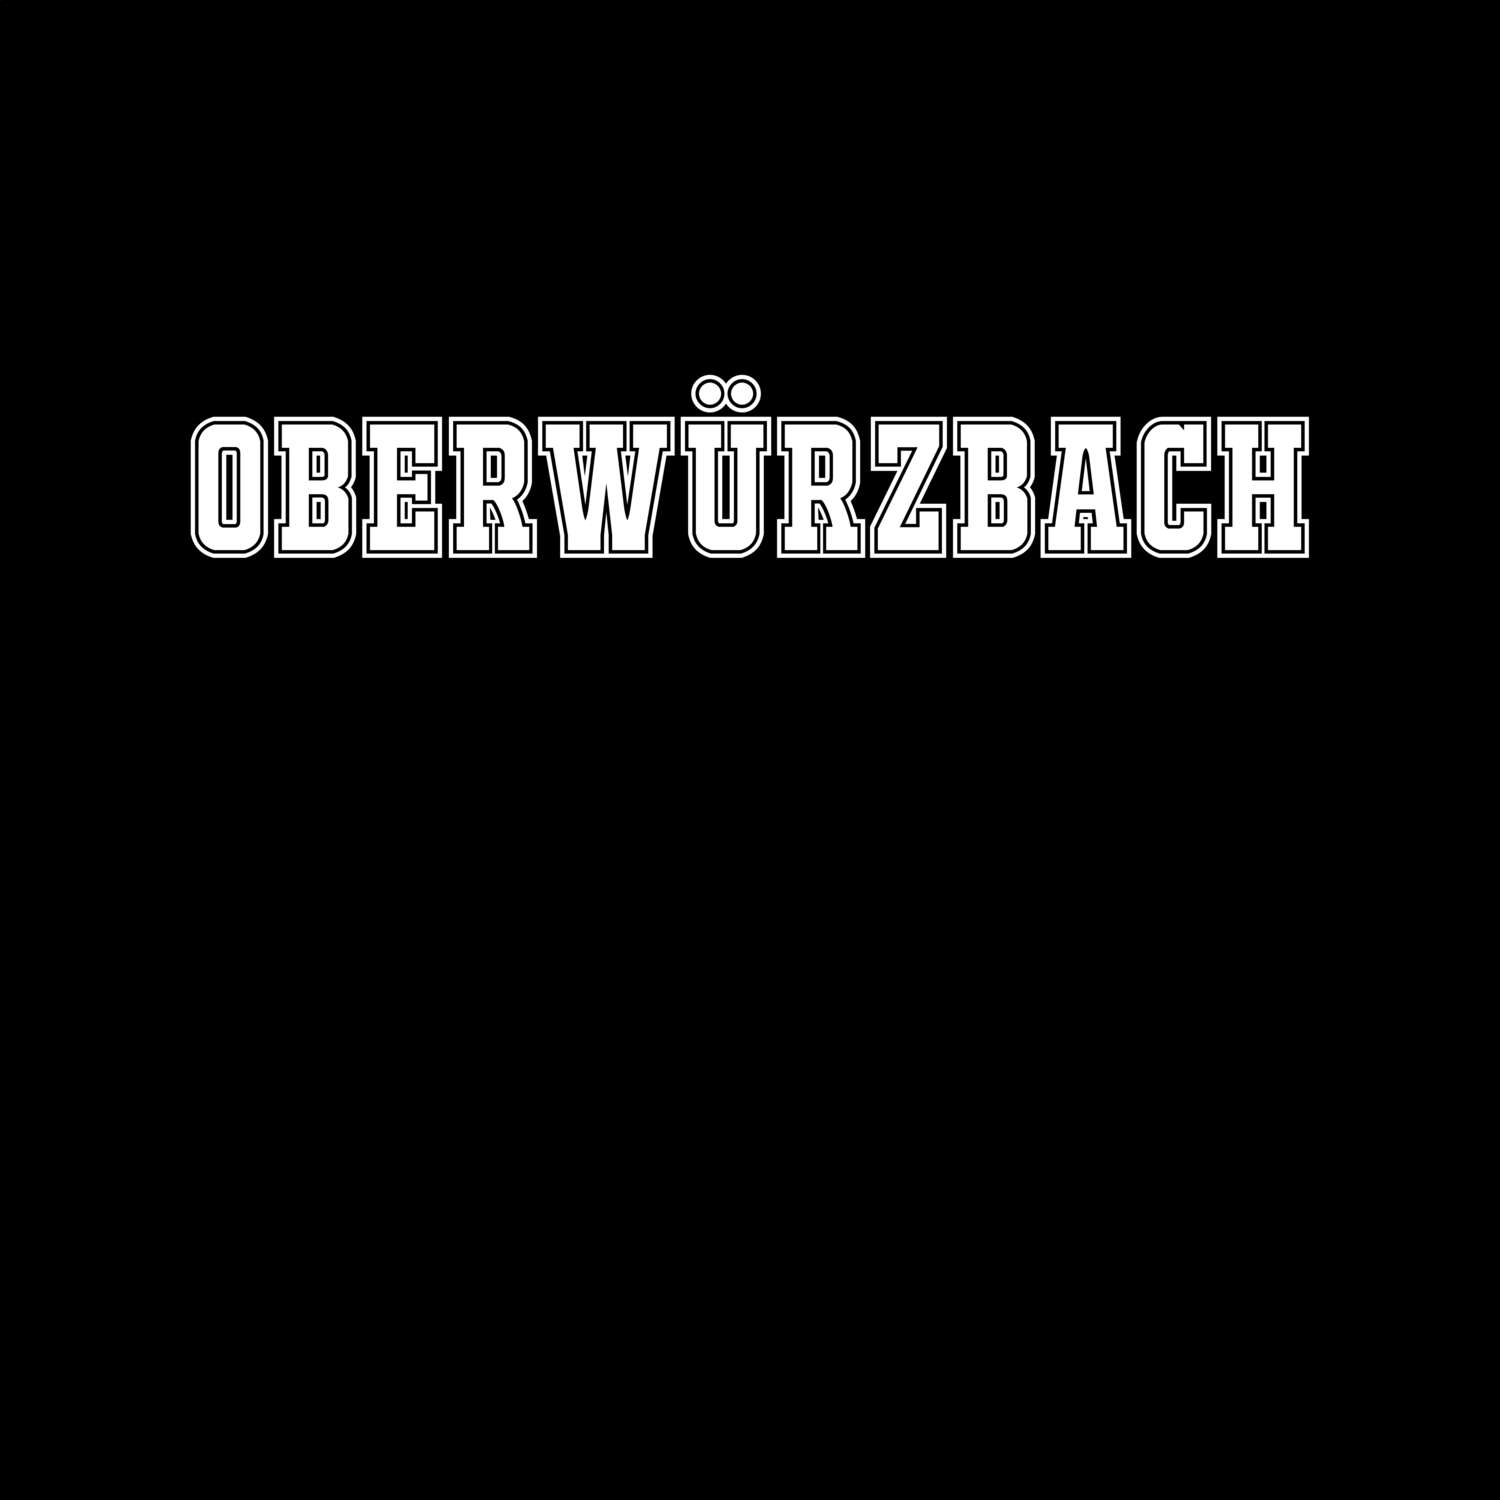 Oberwürzbach T-Shirt »Classic«